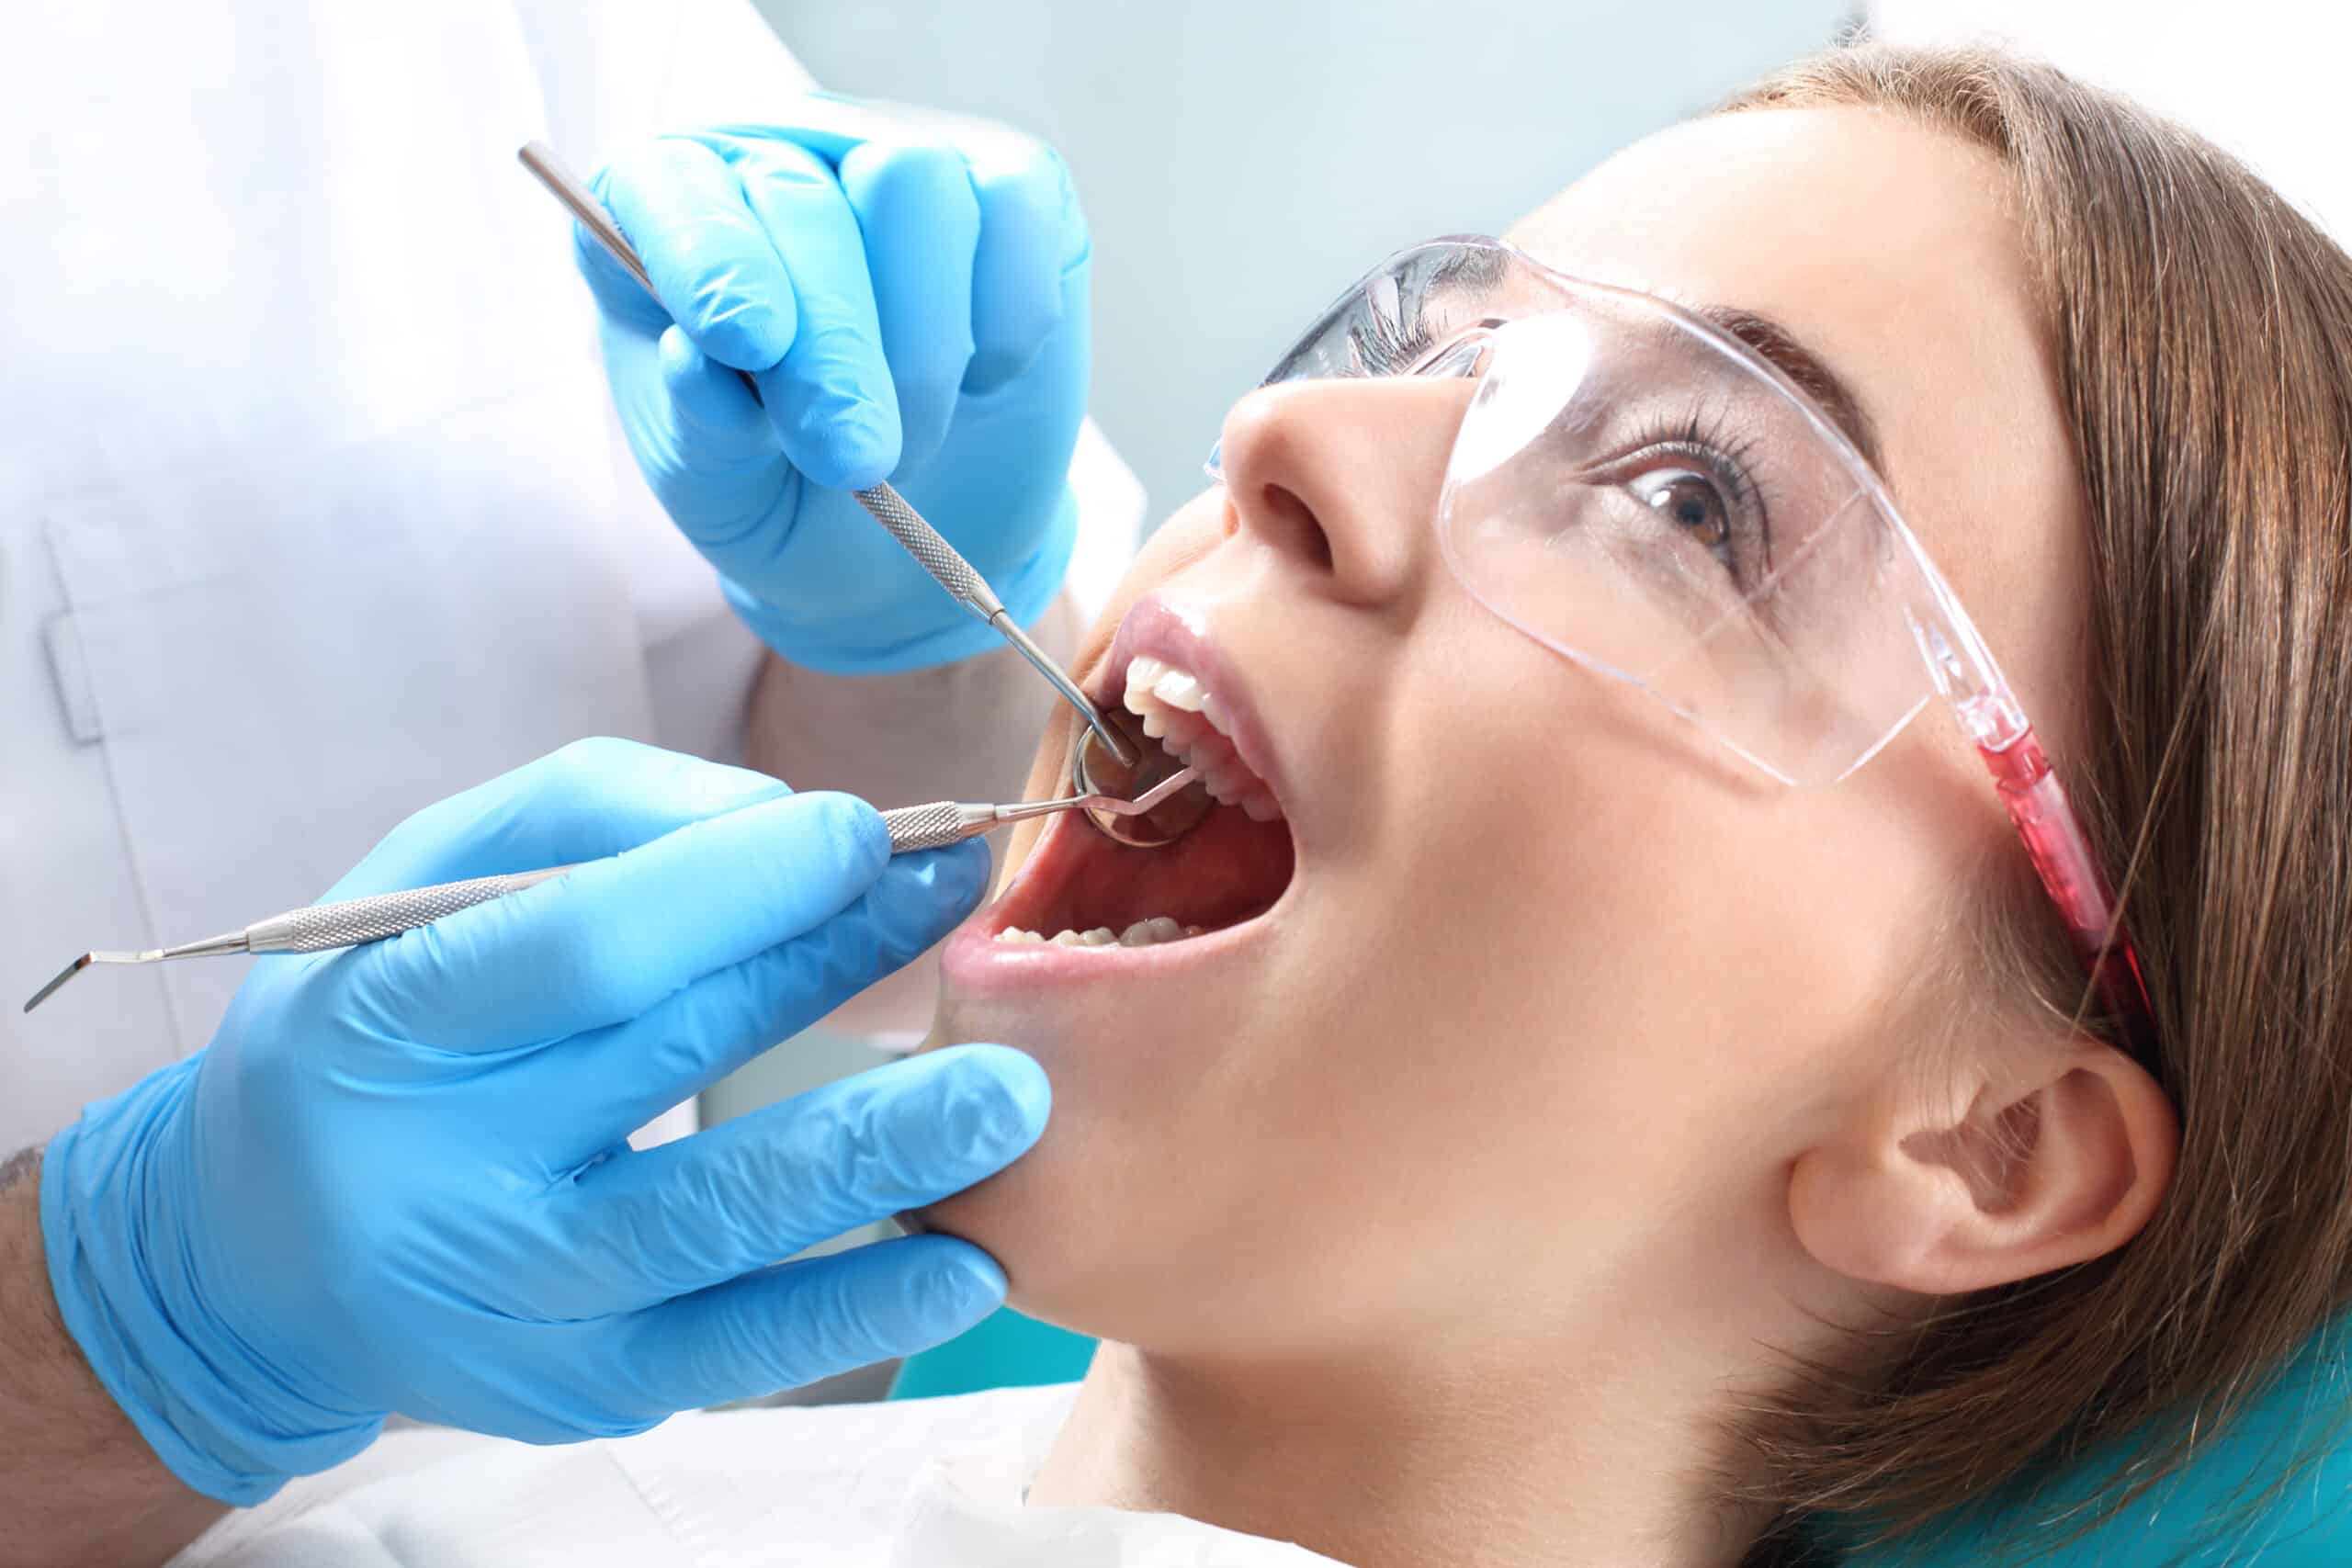 Broken Tooth Repair in Humble Summer Creek Dental dentist in Humble Texas Dr. Tammie Thibodeaux DDS Dr. Samer Dar DDS, MD Dr. Katherine Price